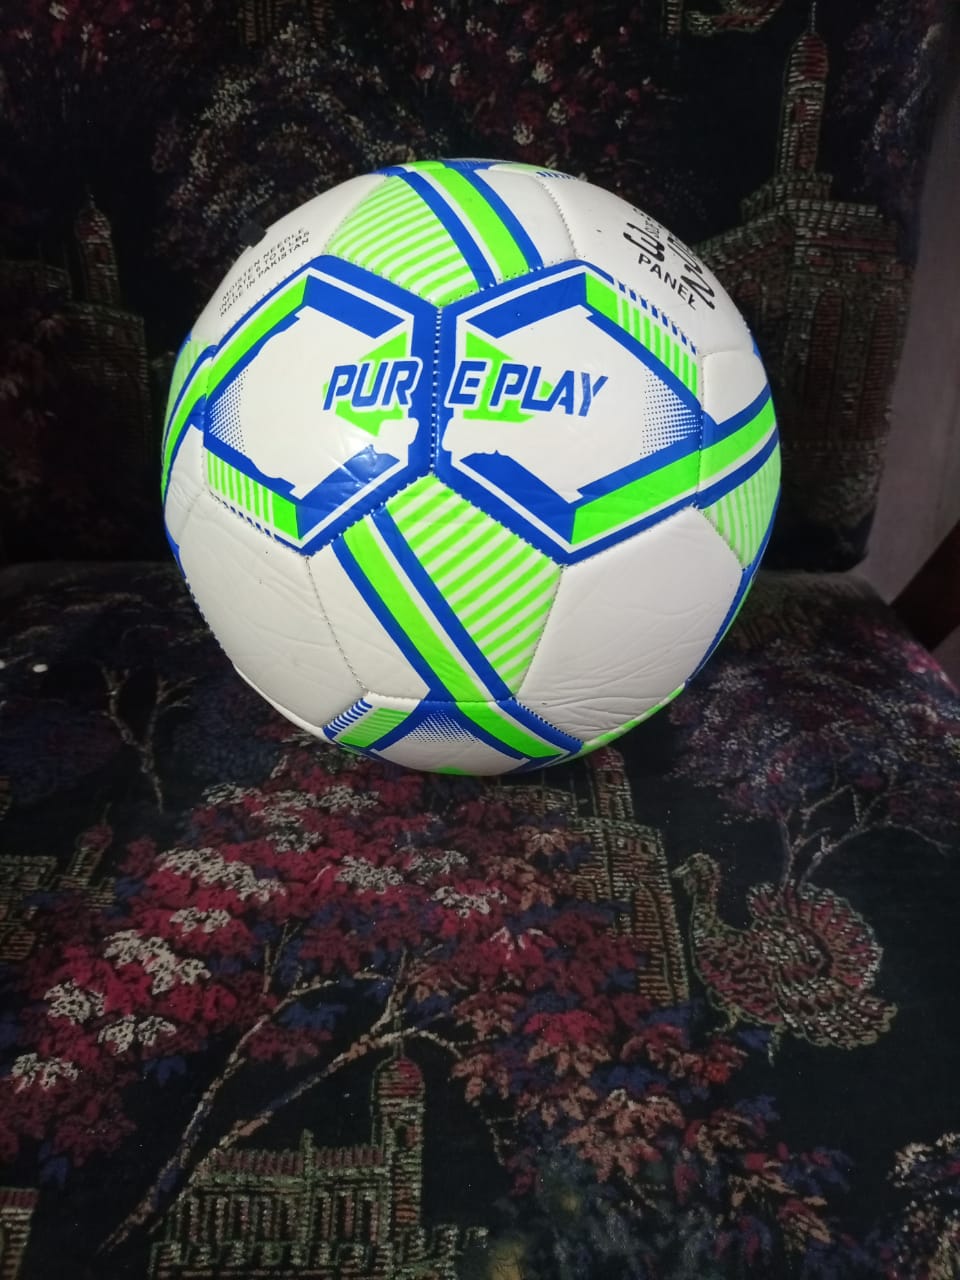 Football soccer ball of size 5